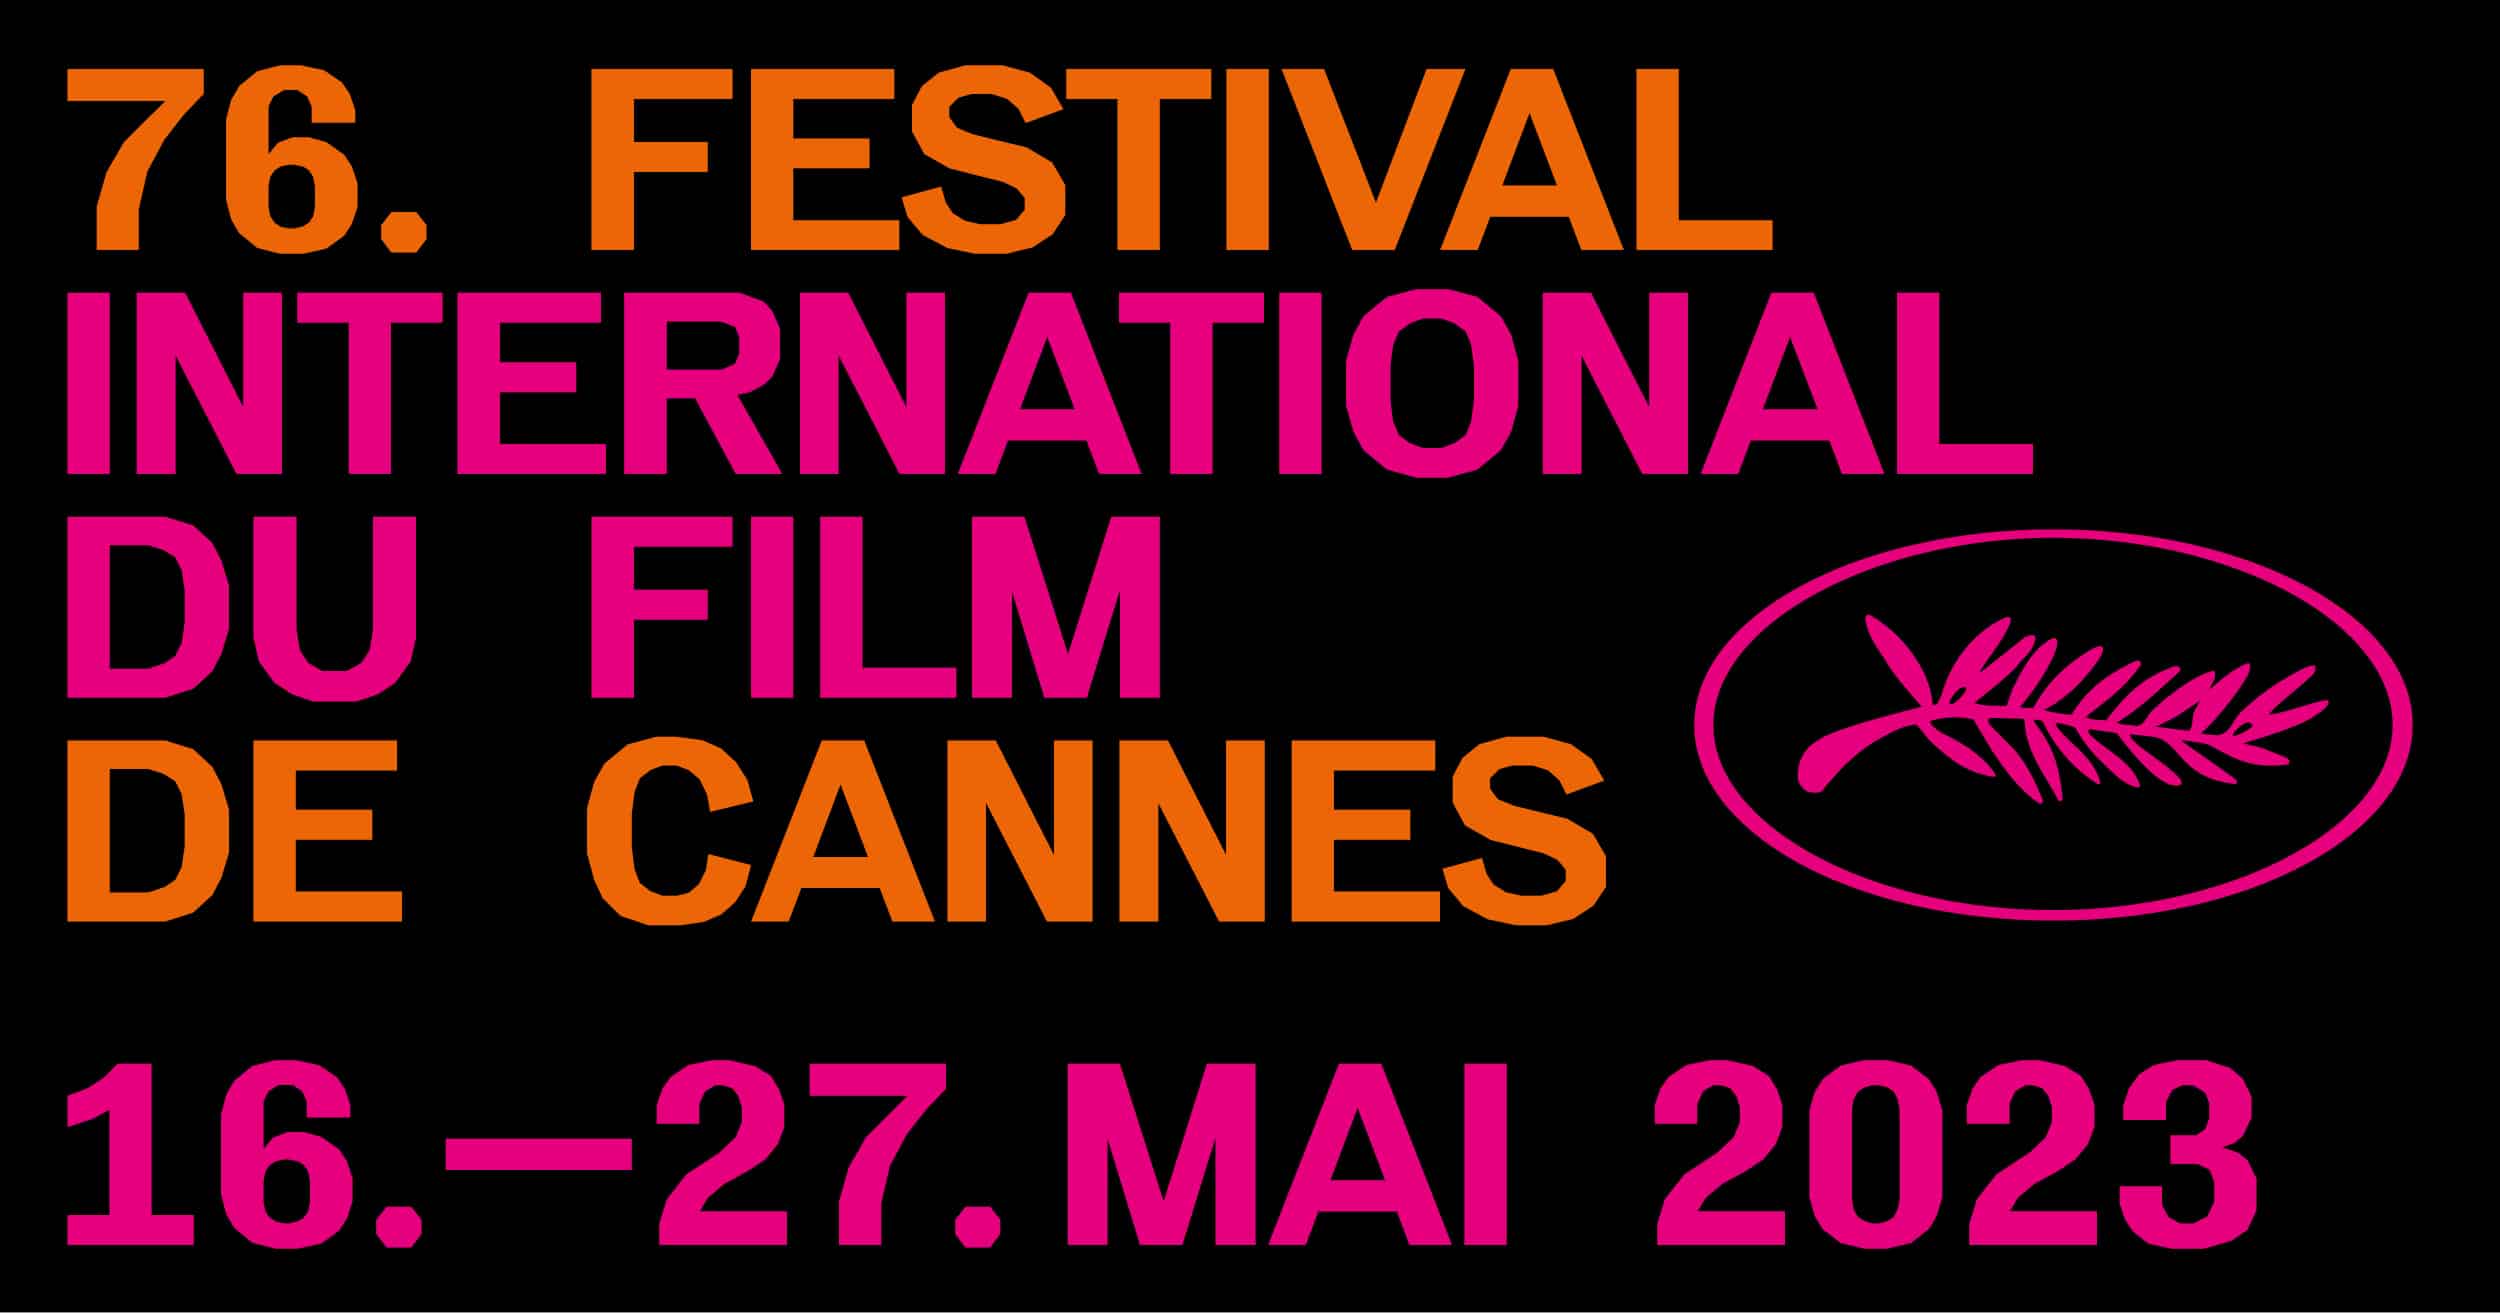 Cannes Film Festival Dates 202423 Kyla Tillie